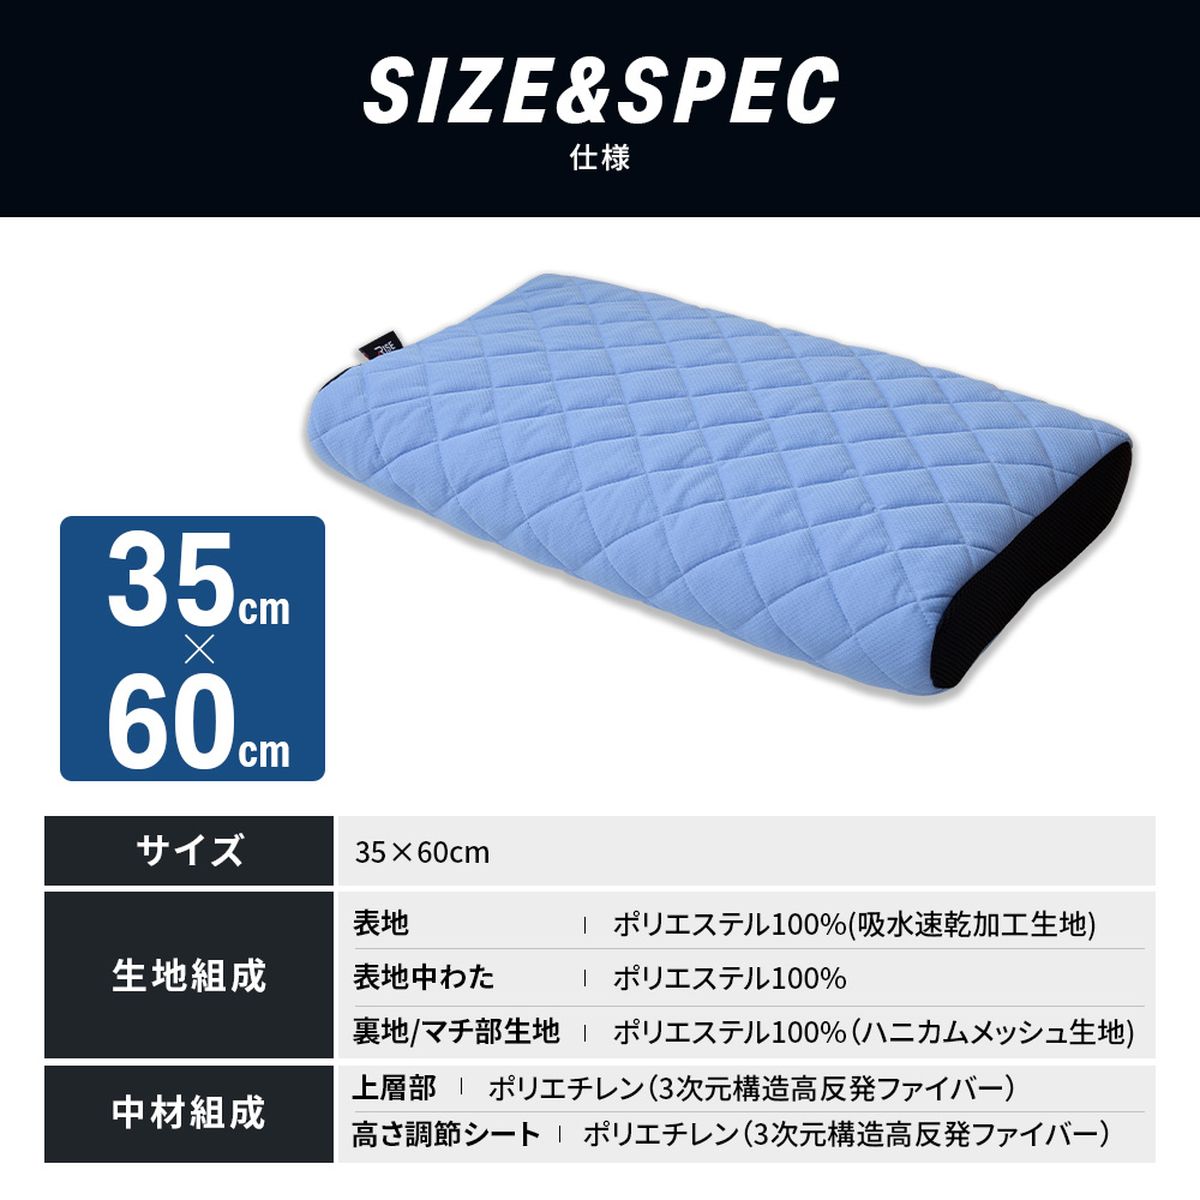 RISE Sleep Niceday 桑田真澄式 動的睡眠 高さ調整高反発ピロー 35×60cm ブルー